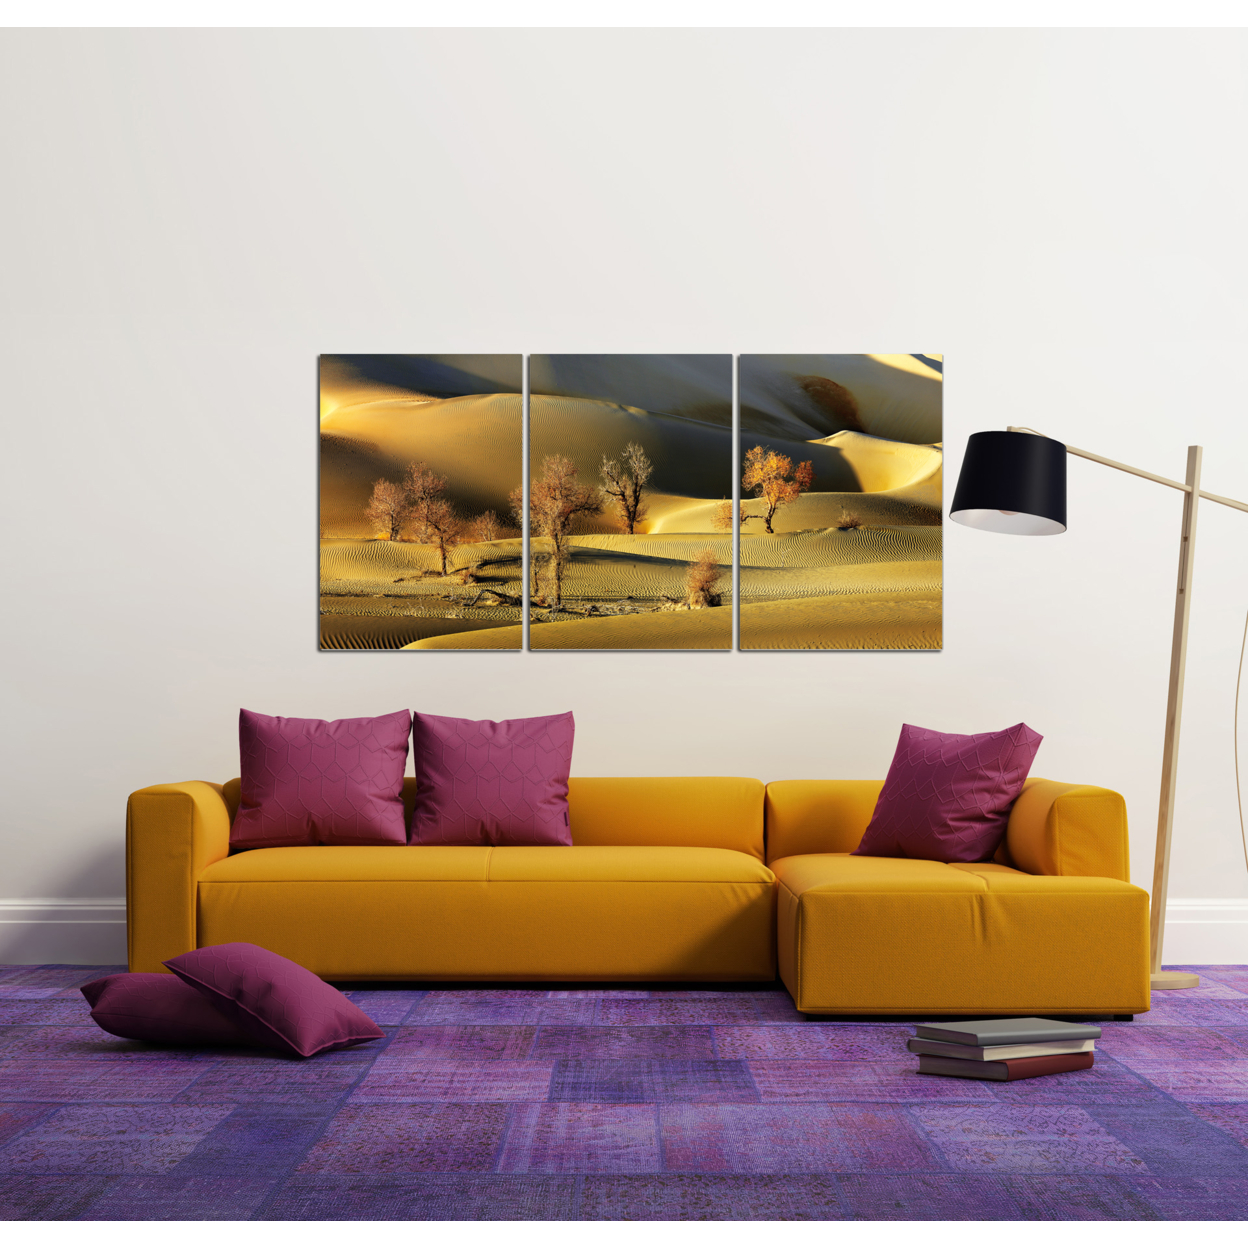 Golden Desert 3 Piece Wrapped Canvas Wall Art Print 27.5x60 Inches